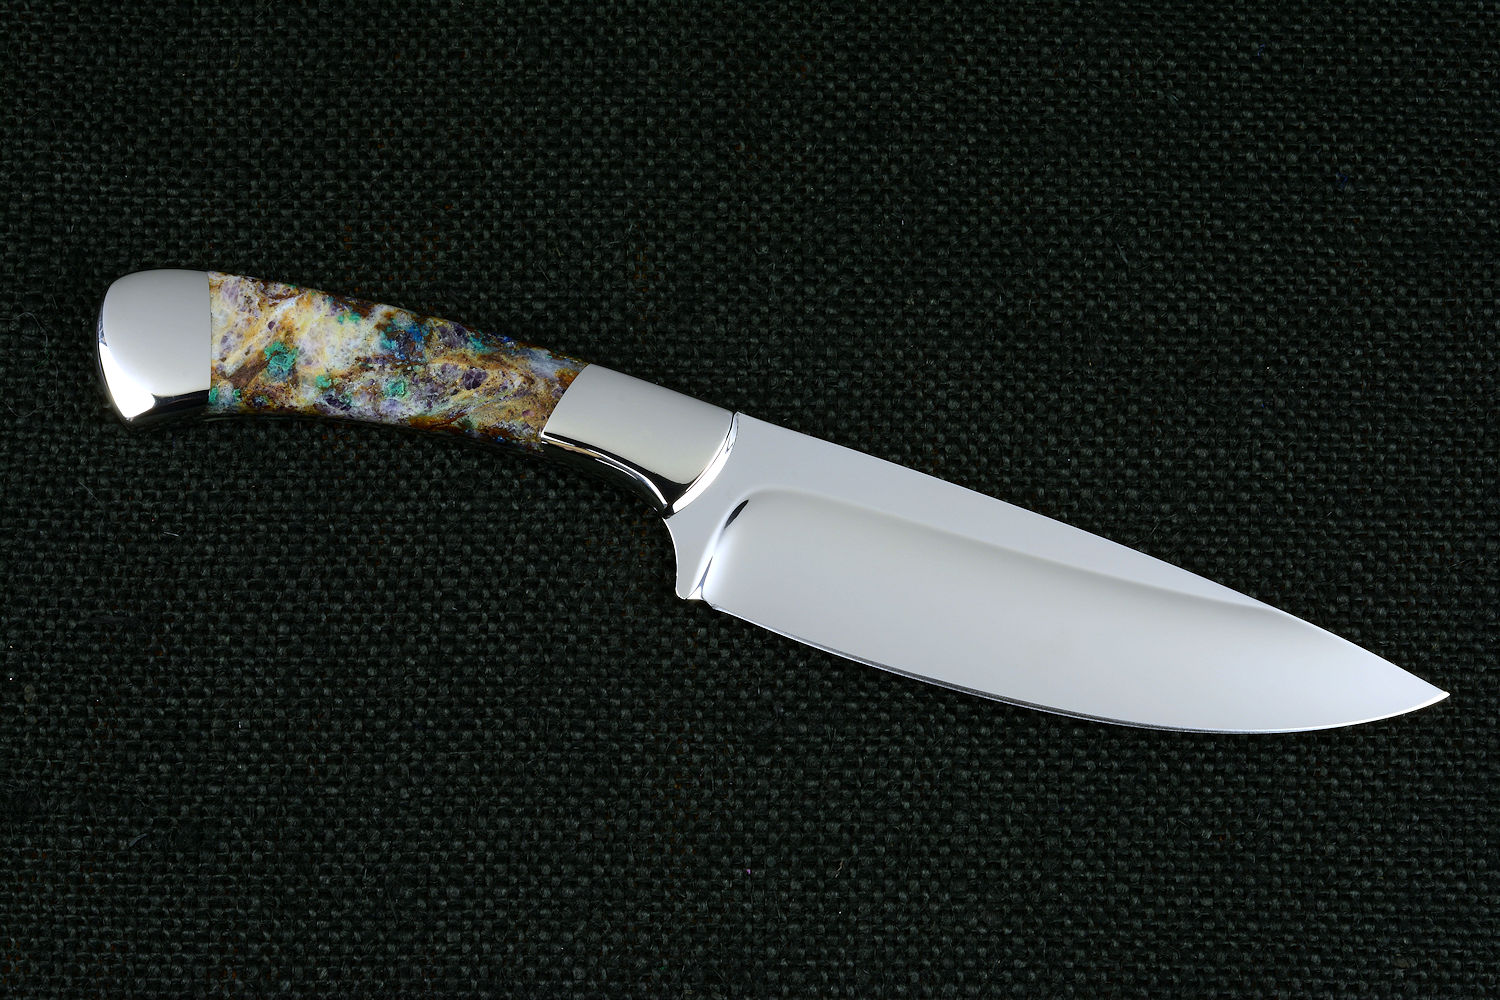 Spartan Knife Block- Complete Damascus Style Knife Set for Men- 5 Chef Knives, Knife Sharpener & Bamboo Spartan Knife Holder. Funny Stabbed Man